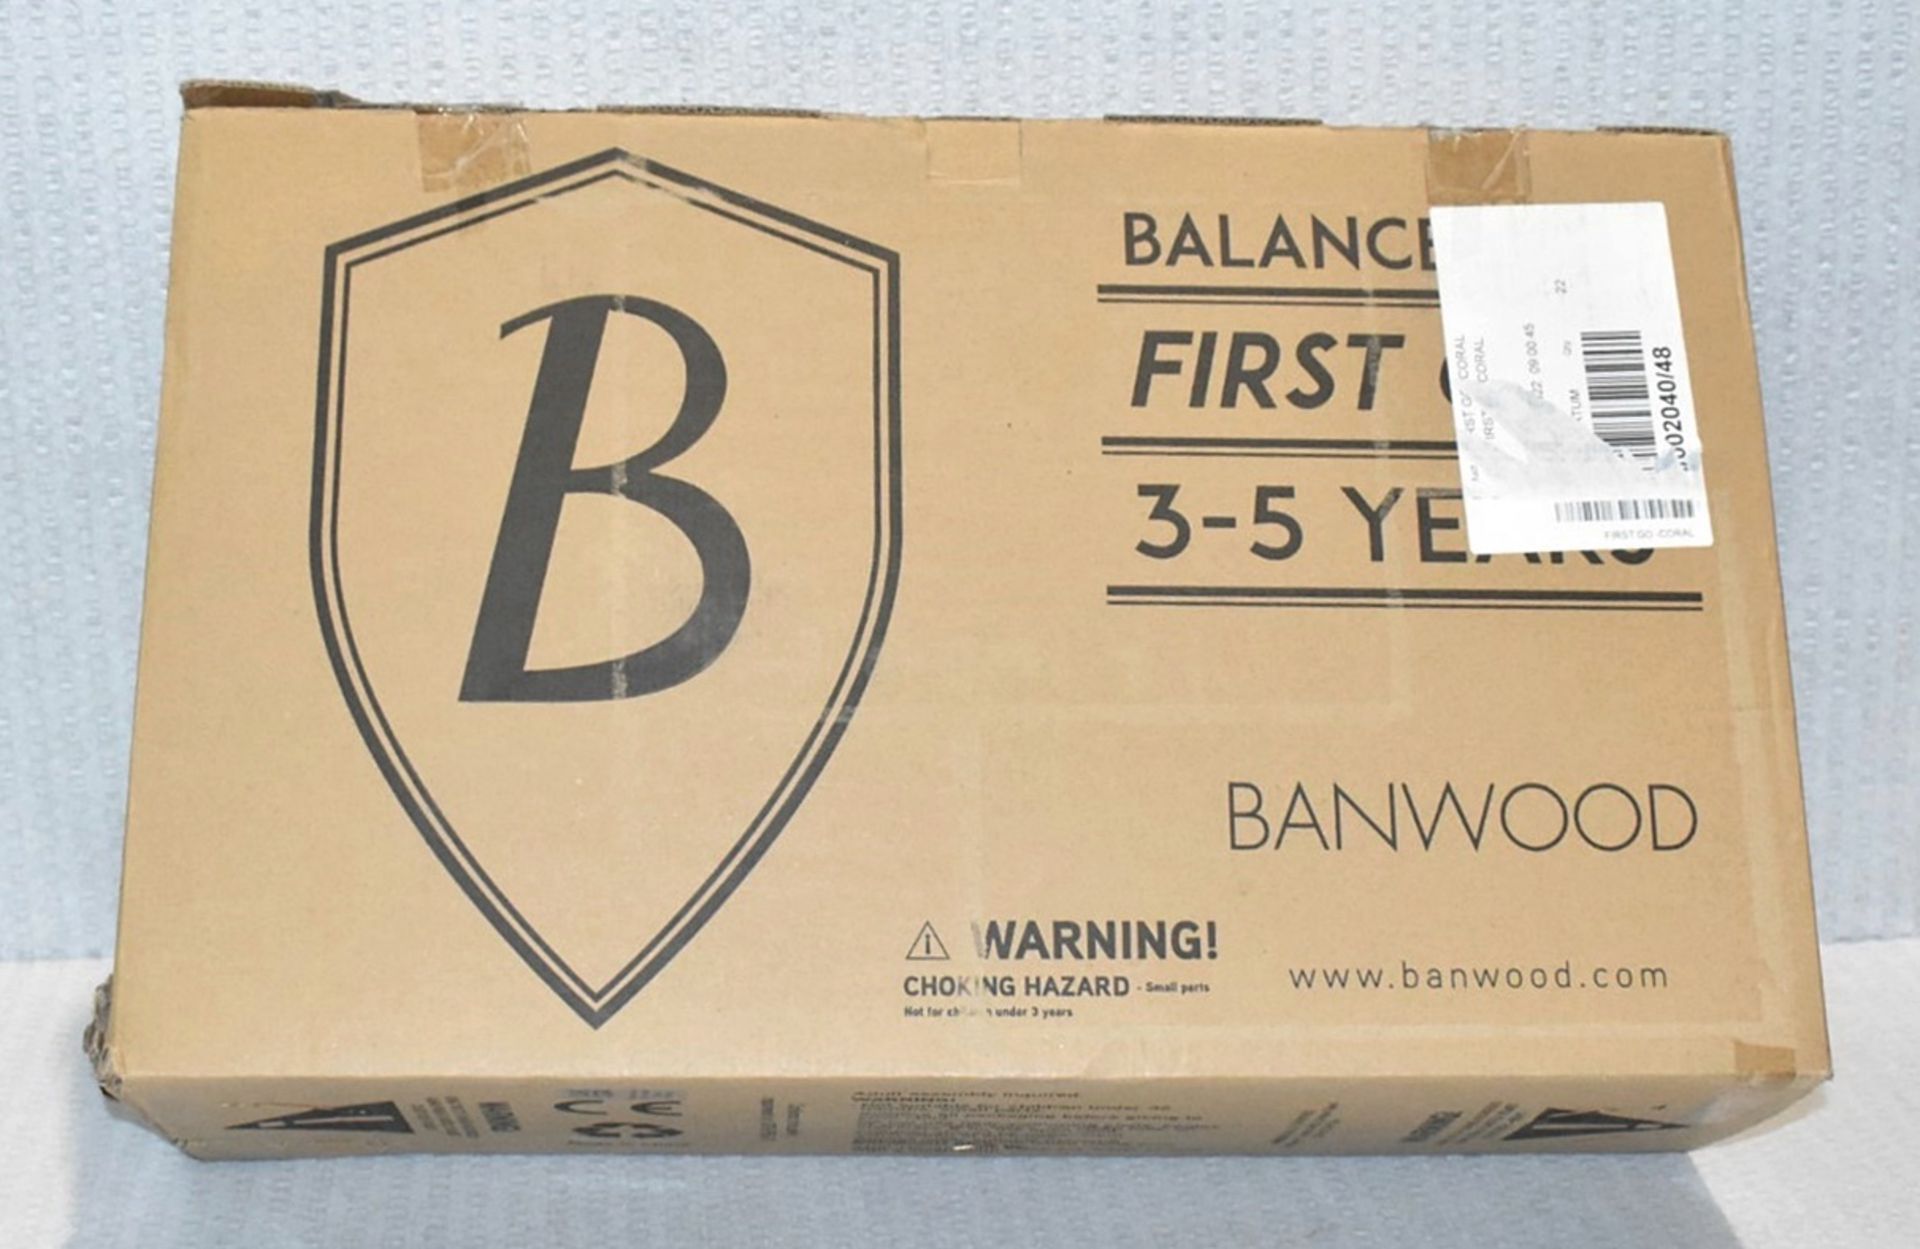 1 x BANWOOD Child's Balance Bike in Coral Pink - Original Price £139.00 - Image 4 of 9